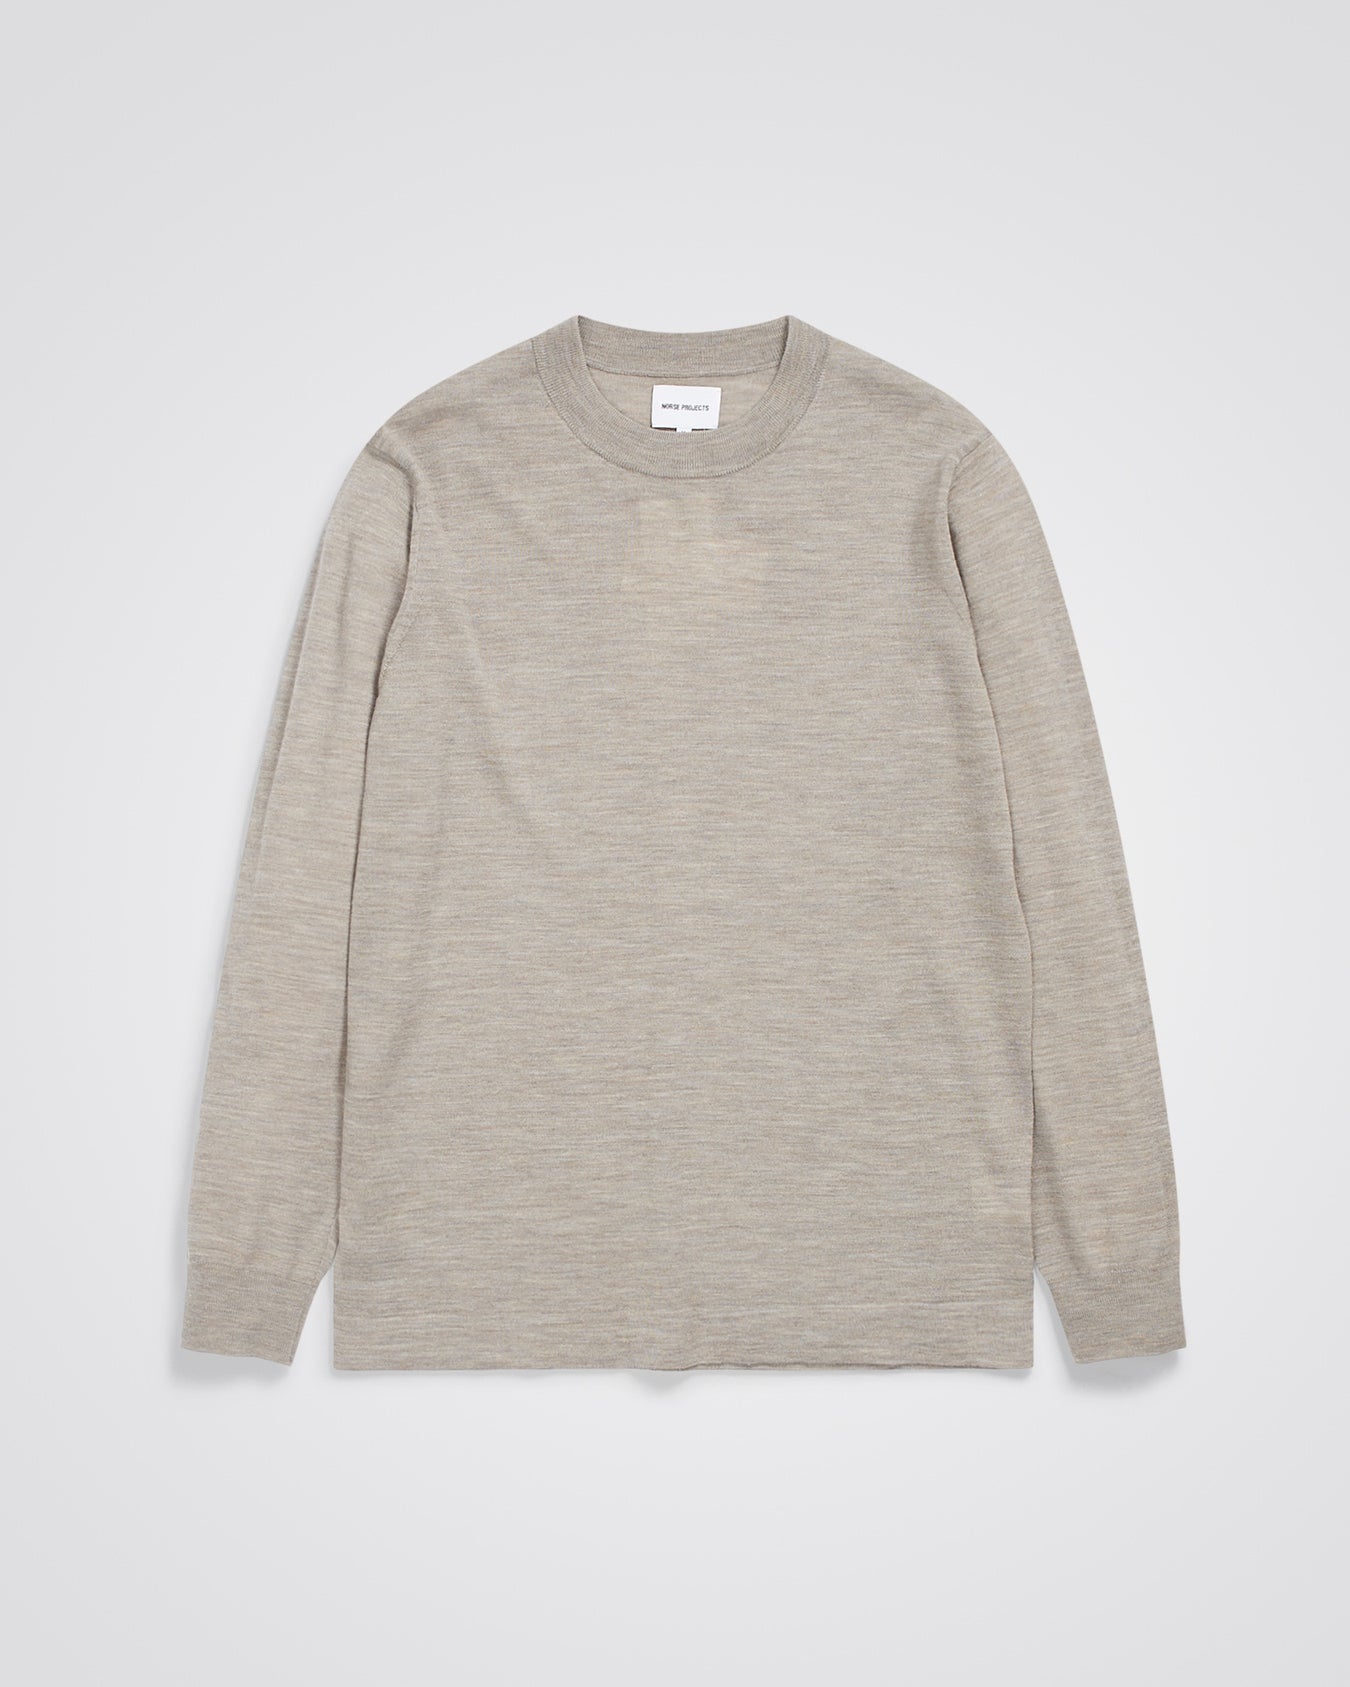 Teis Tech Merino Sweater - Sand